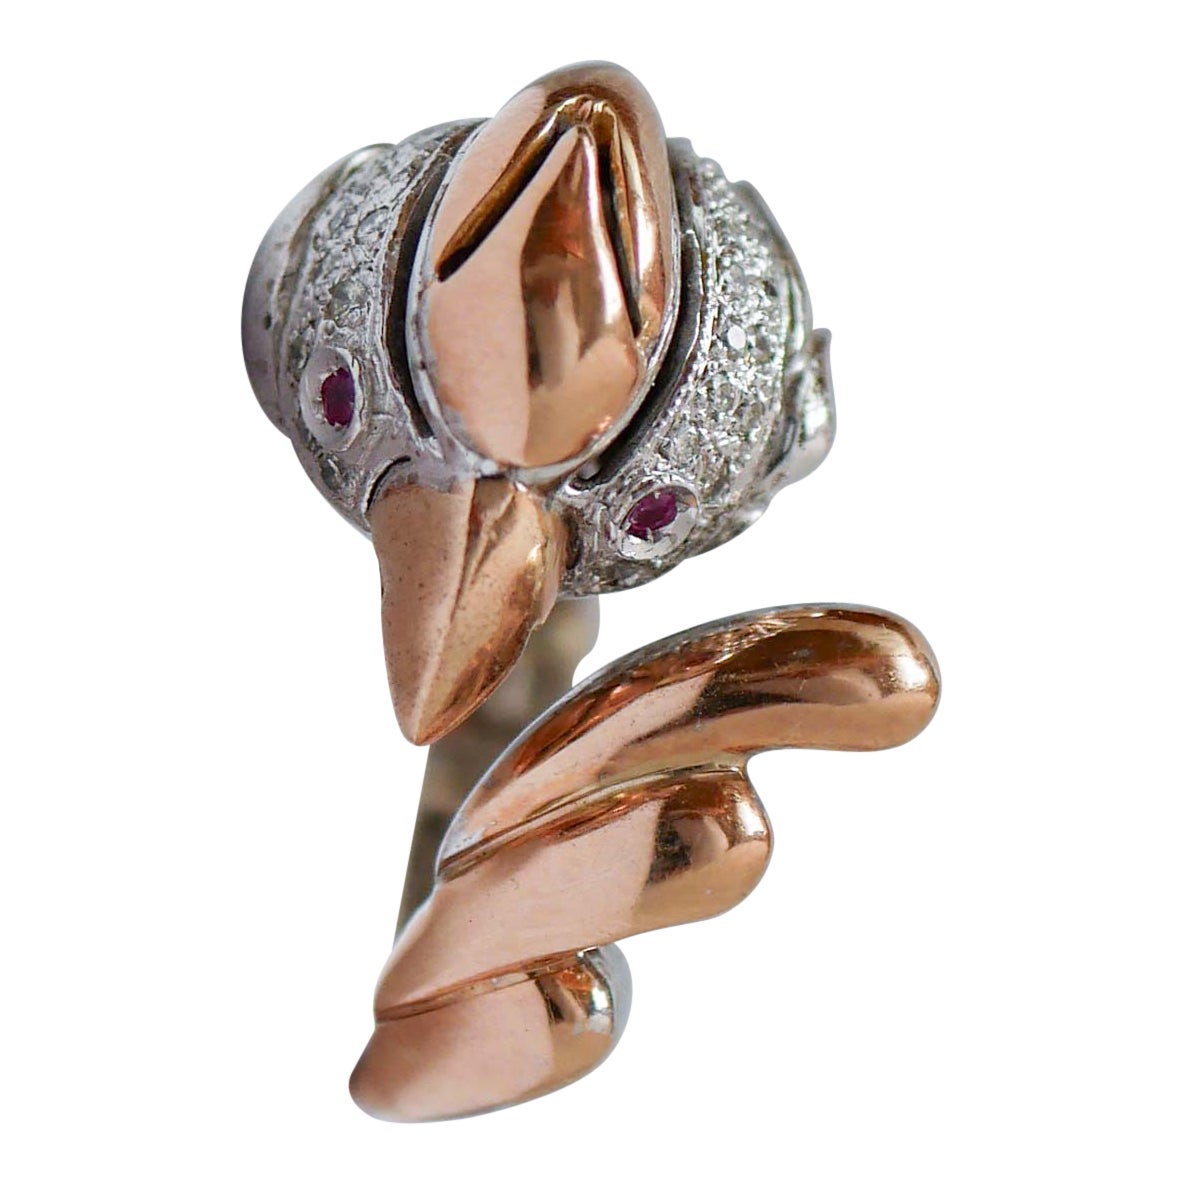 Rubies, Diamonds, 14 Karat Rose and White Gold Parot Ring. For Sale